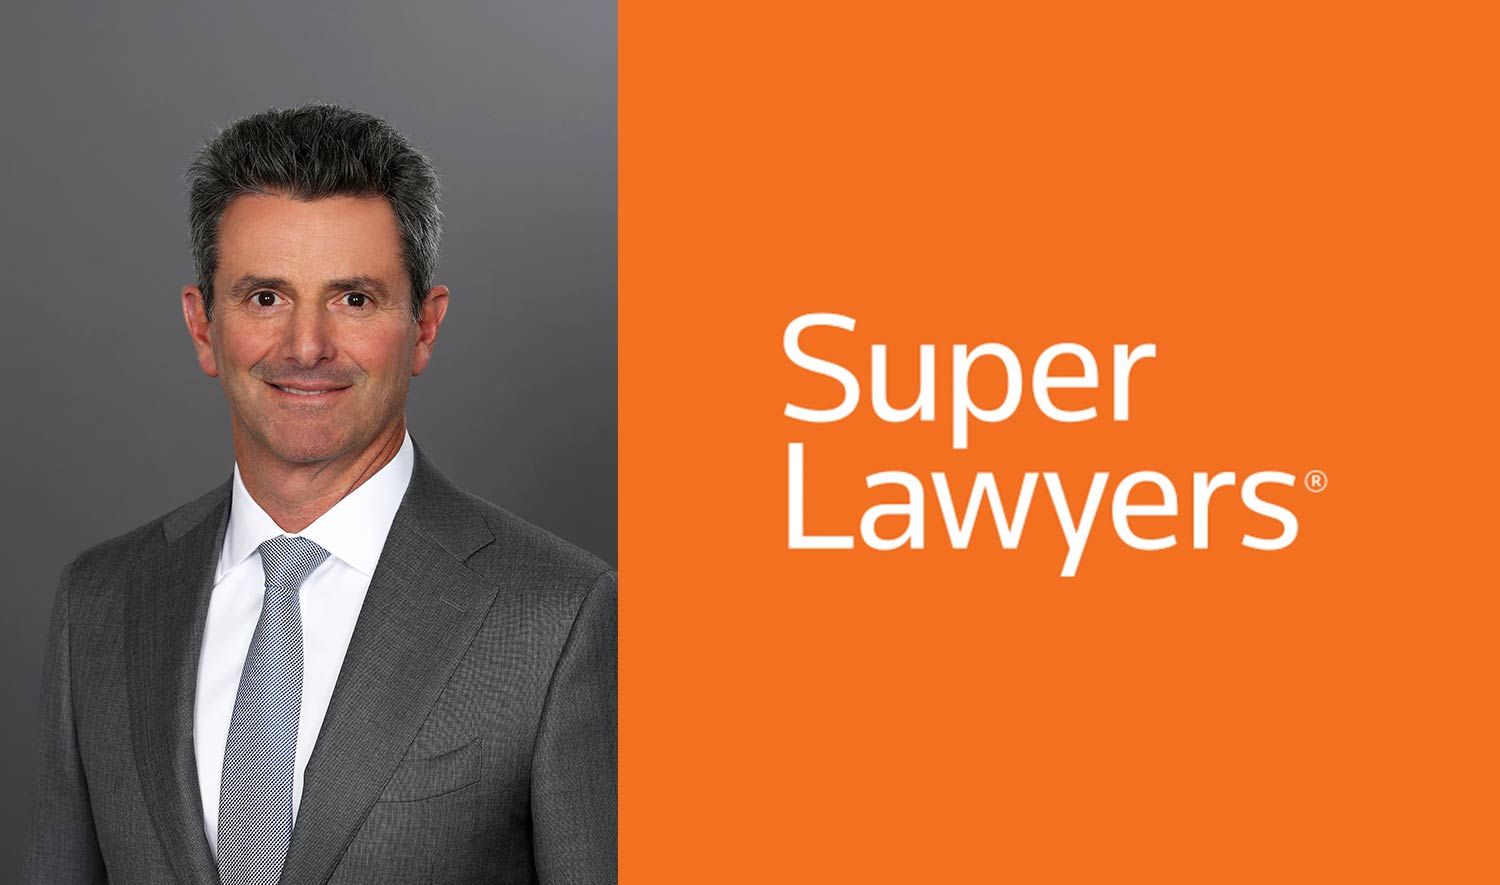 Michael_Taitelman-Super_Lawyer-Featured_Image-post_by-Rodezno_Studios-1